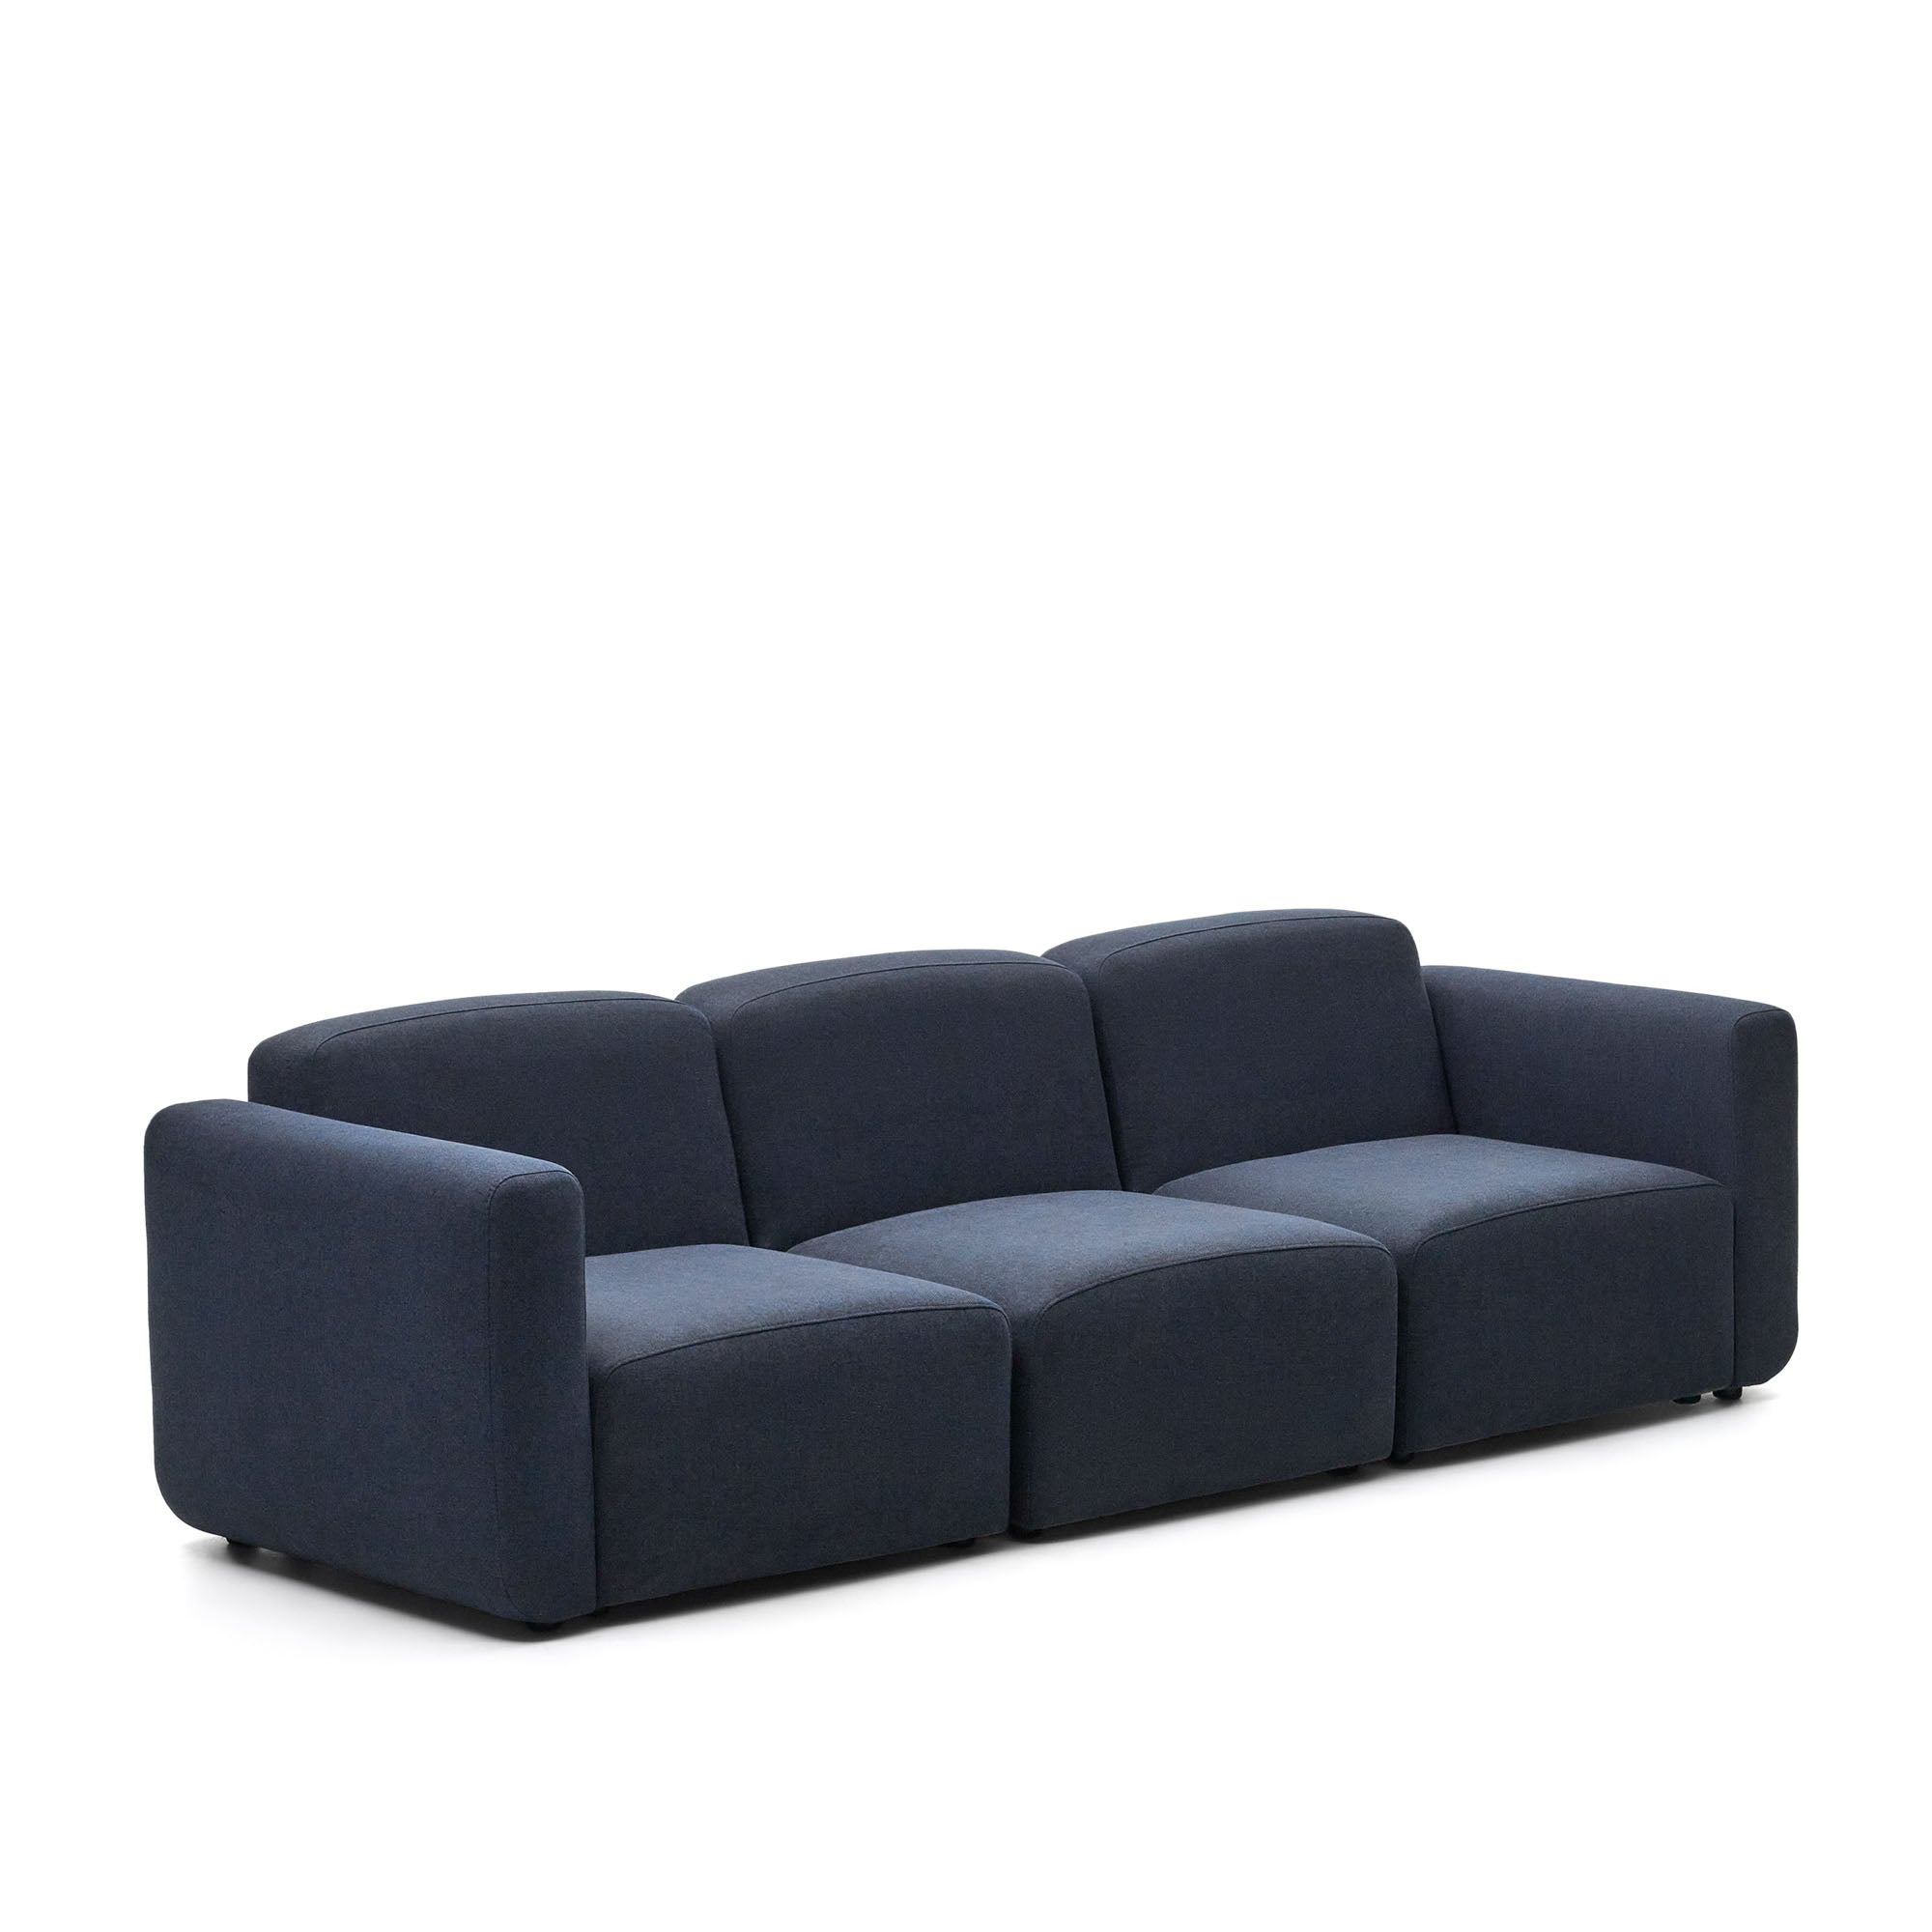 Neom 3 seater modular sofa in blue, 263 cm